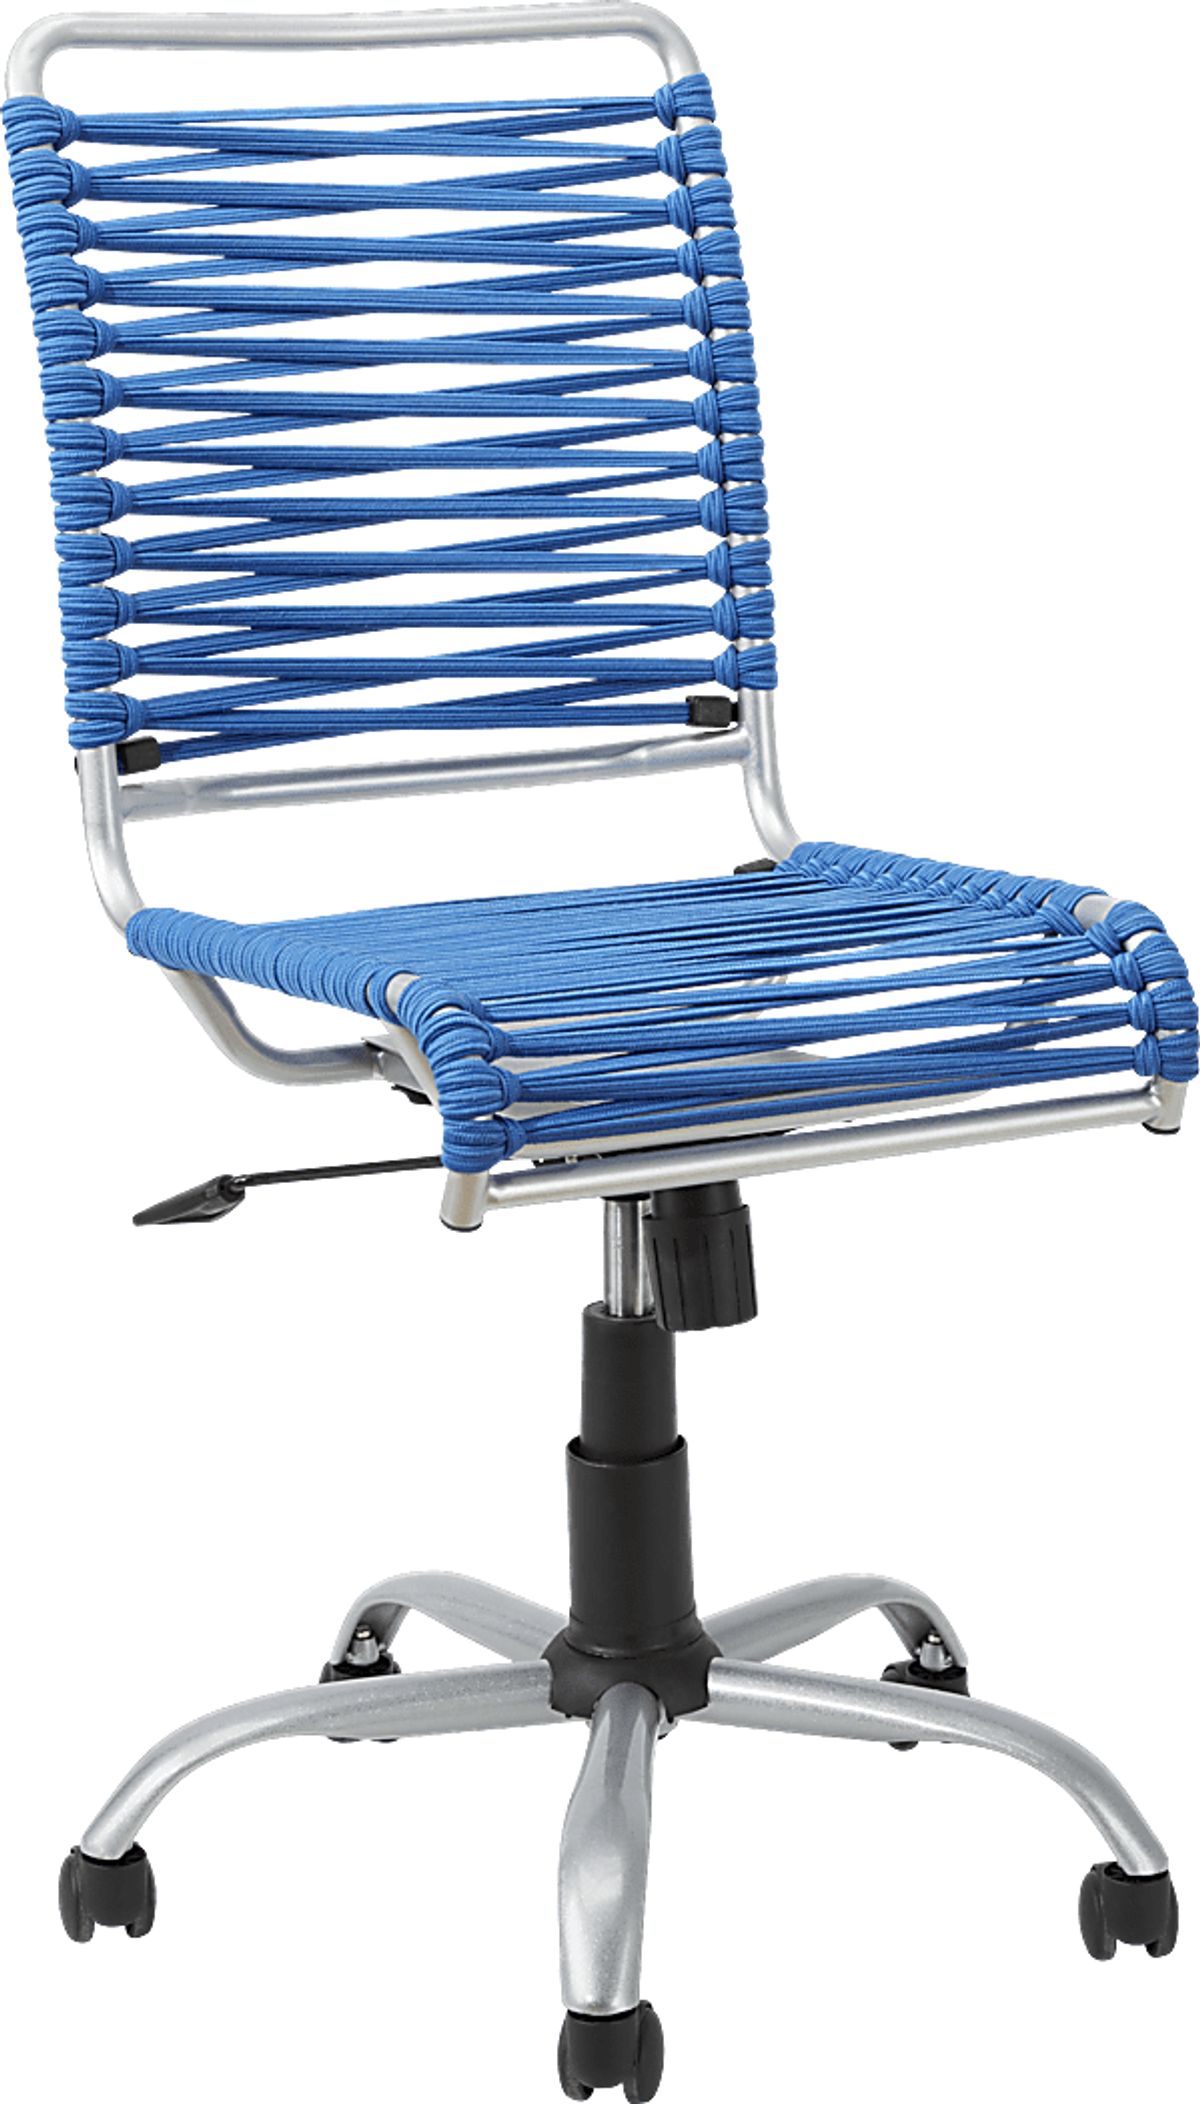 Kids Bungee Twist Blue Desk Chair 38374219 Image Item?cache Id=0974d9d74f6ded15f9cfaae26a5ca563&w=1200